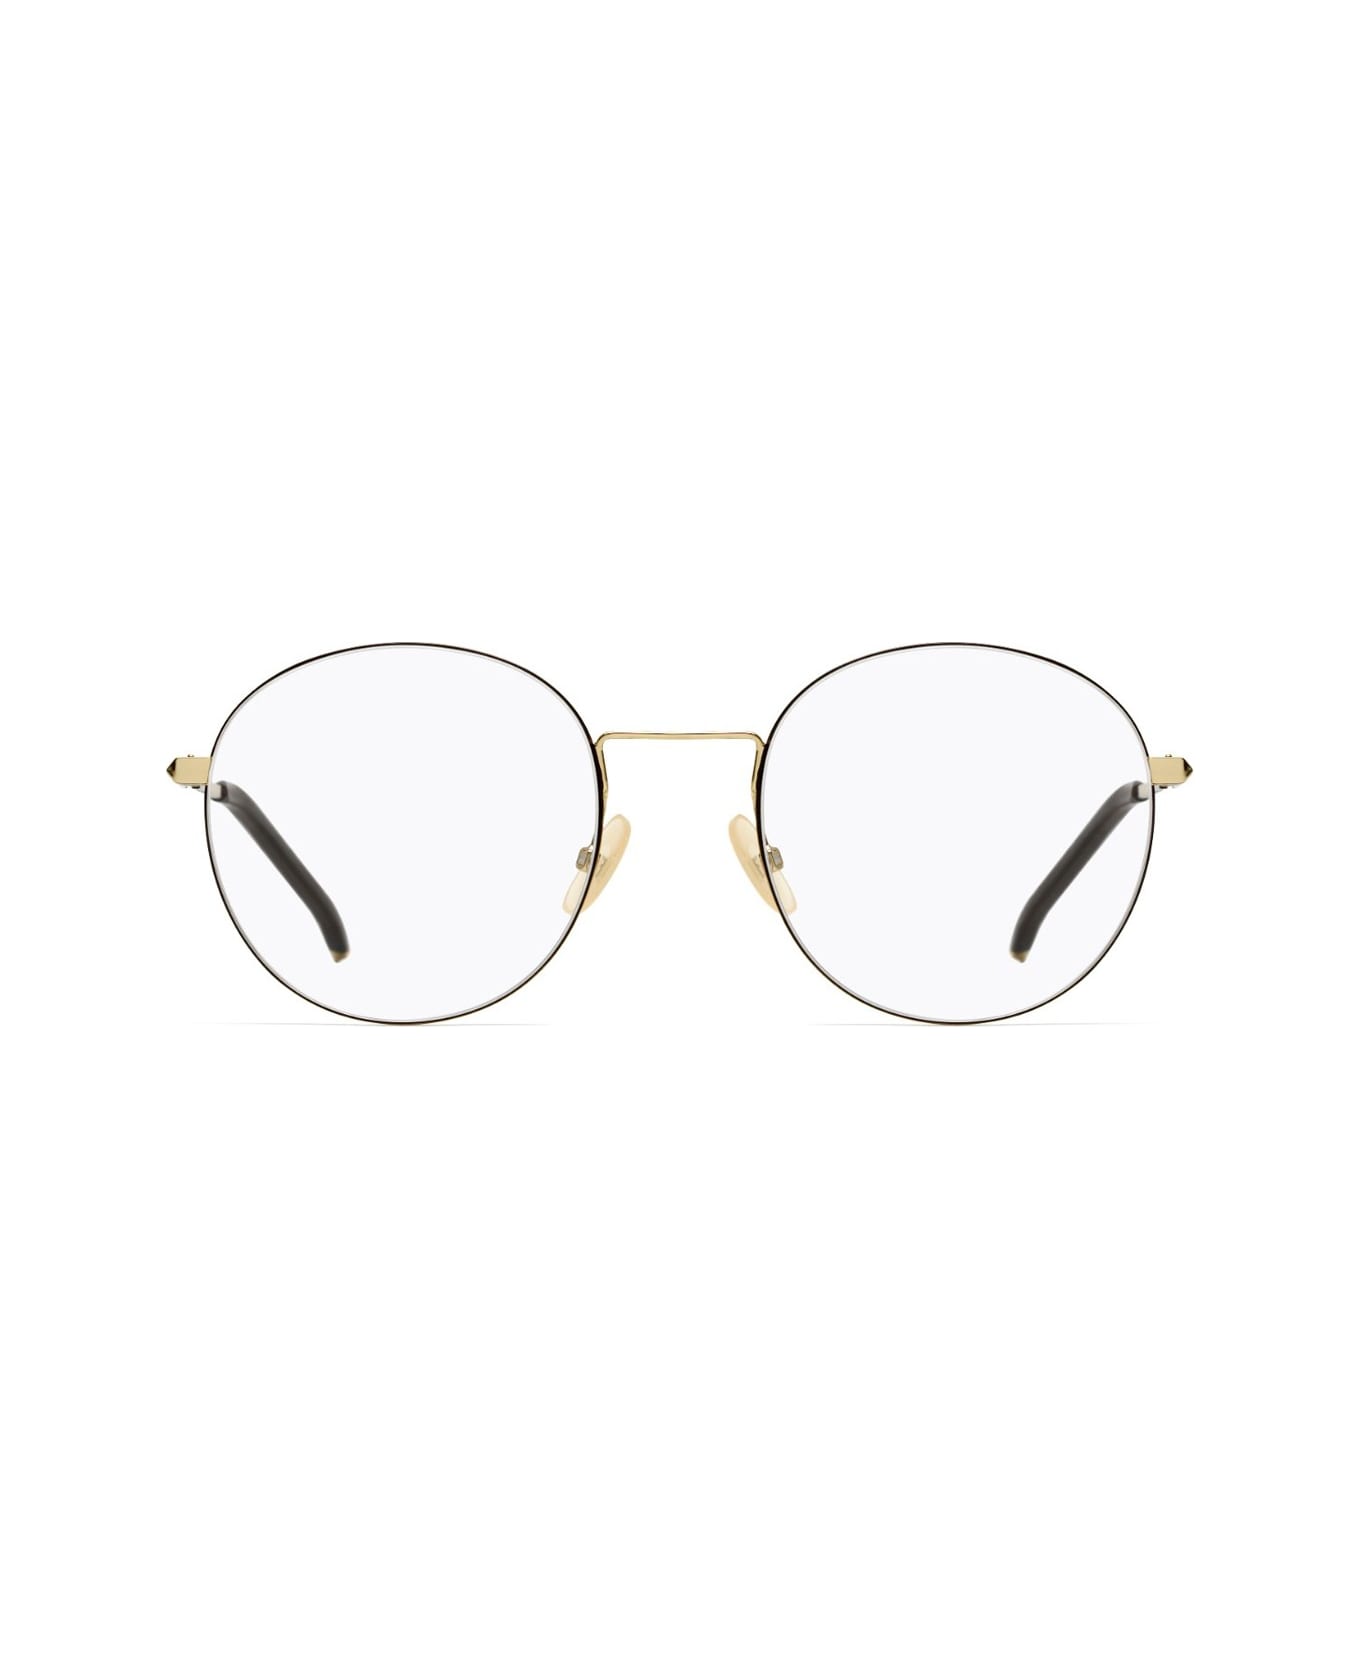 Fendi Eyewear Ff M0049 Glasses - Oro